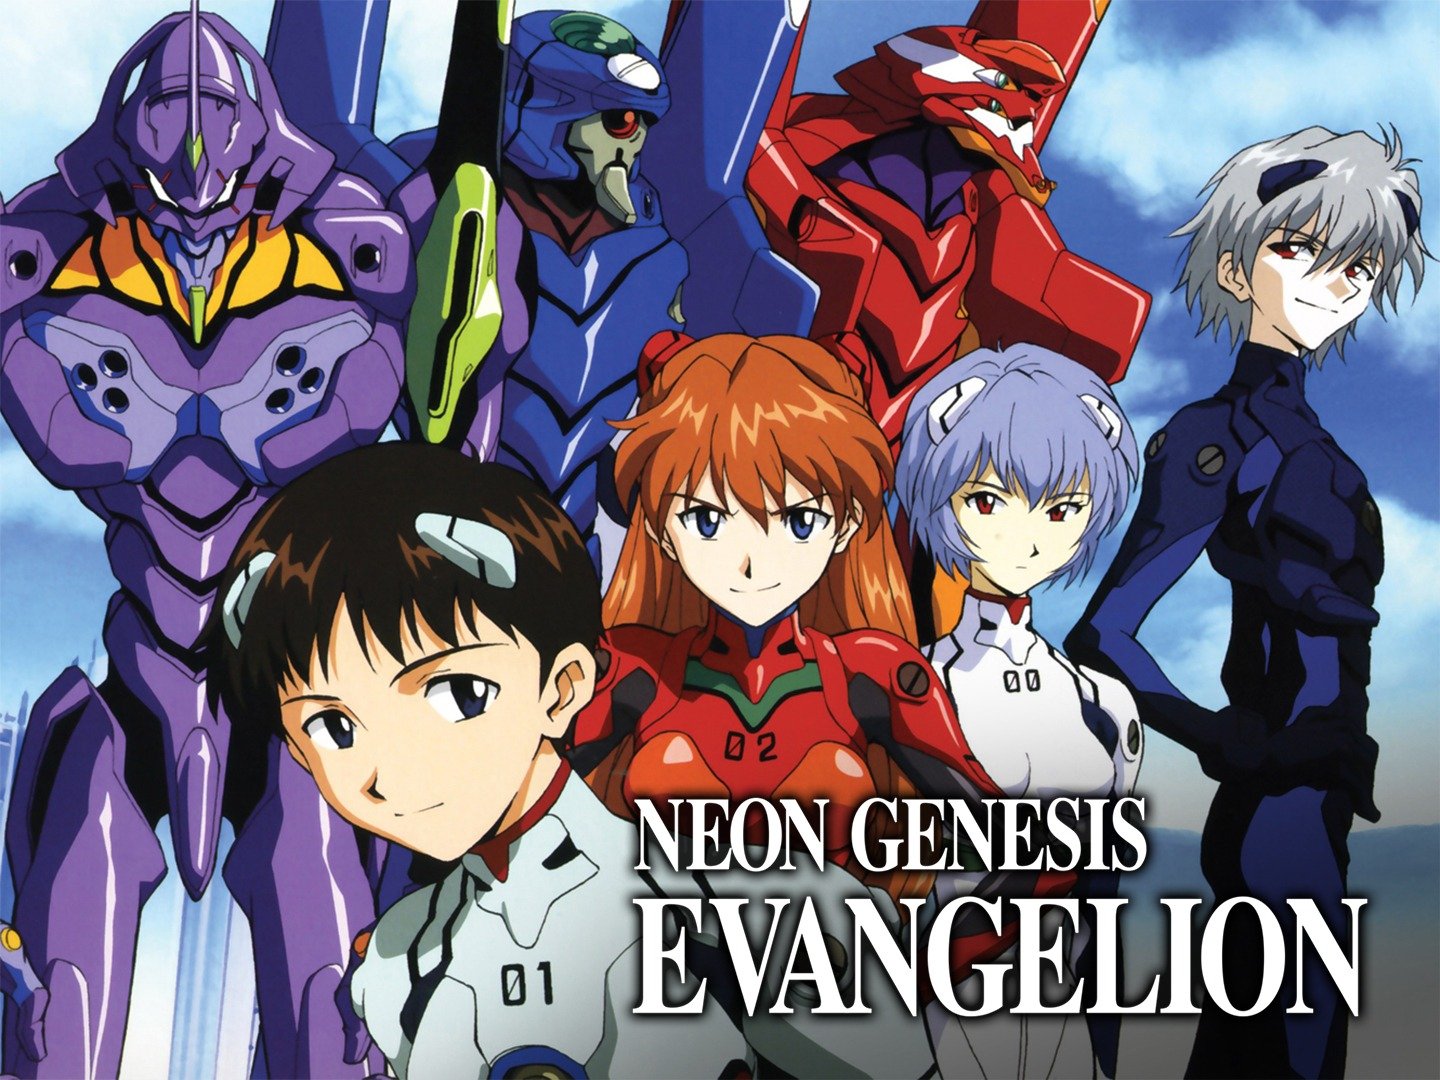 Neon Genesis Evangelion Blu-ray & DVD Release!